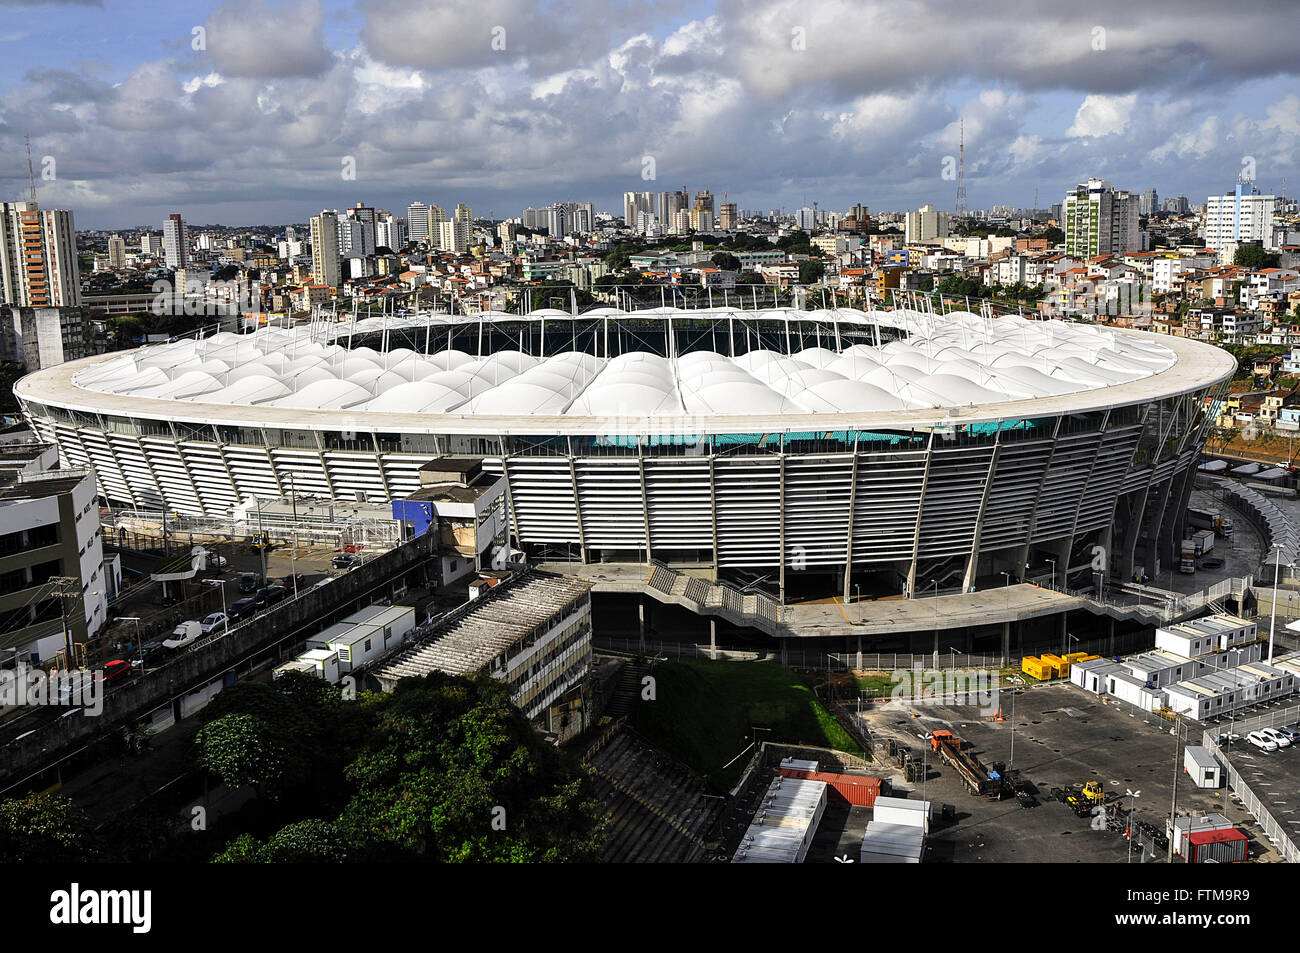 Sports Complex Cultural Octavio Mangabeira - Itaipava Arena Fonte Nova Stock Photo